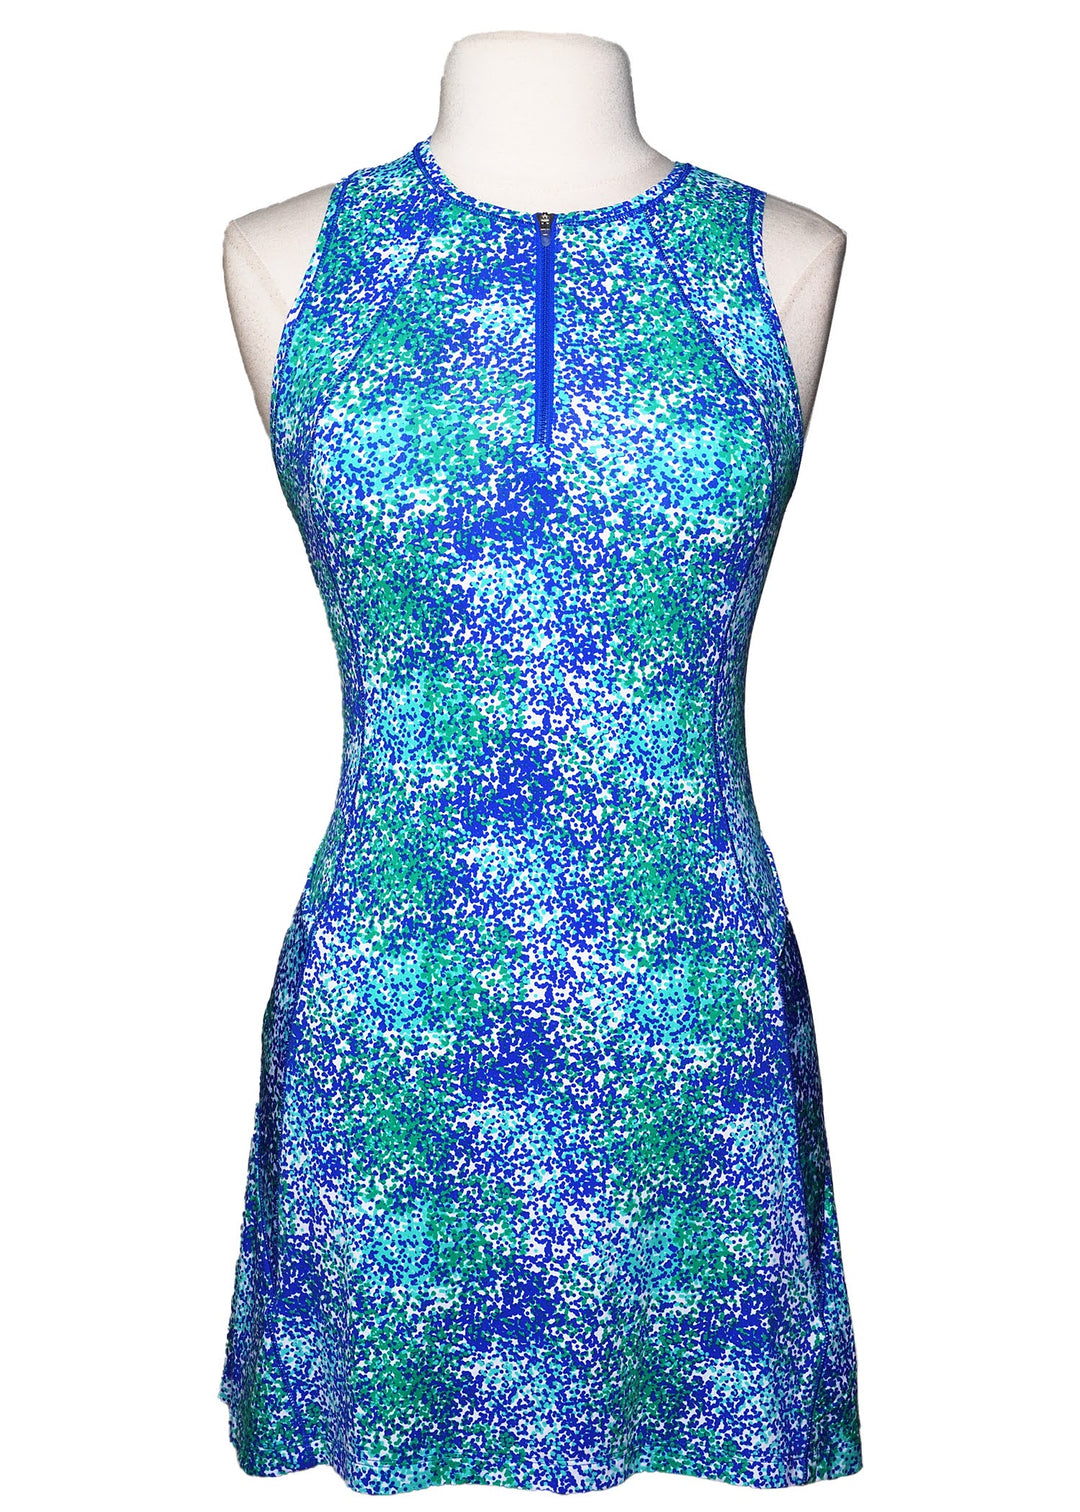 IBKUL Spray Paint Tennis Dress - Blue/Green - Skorzie